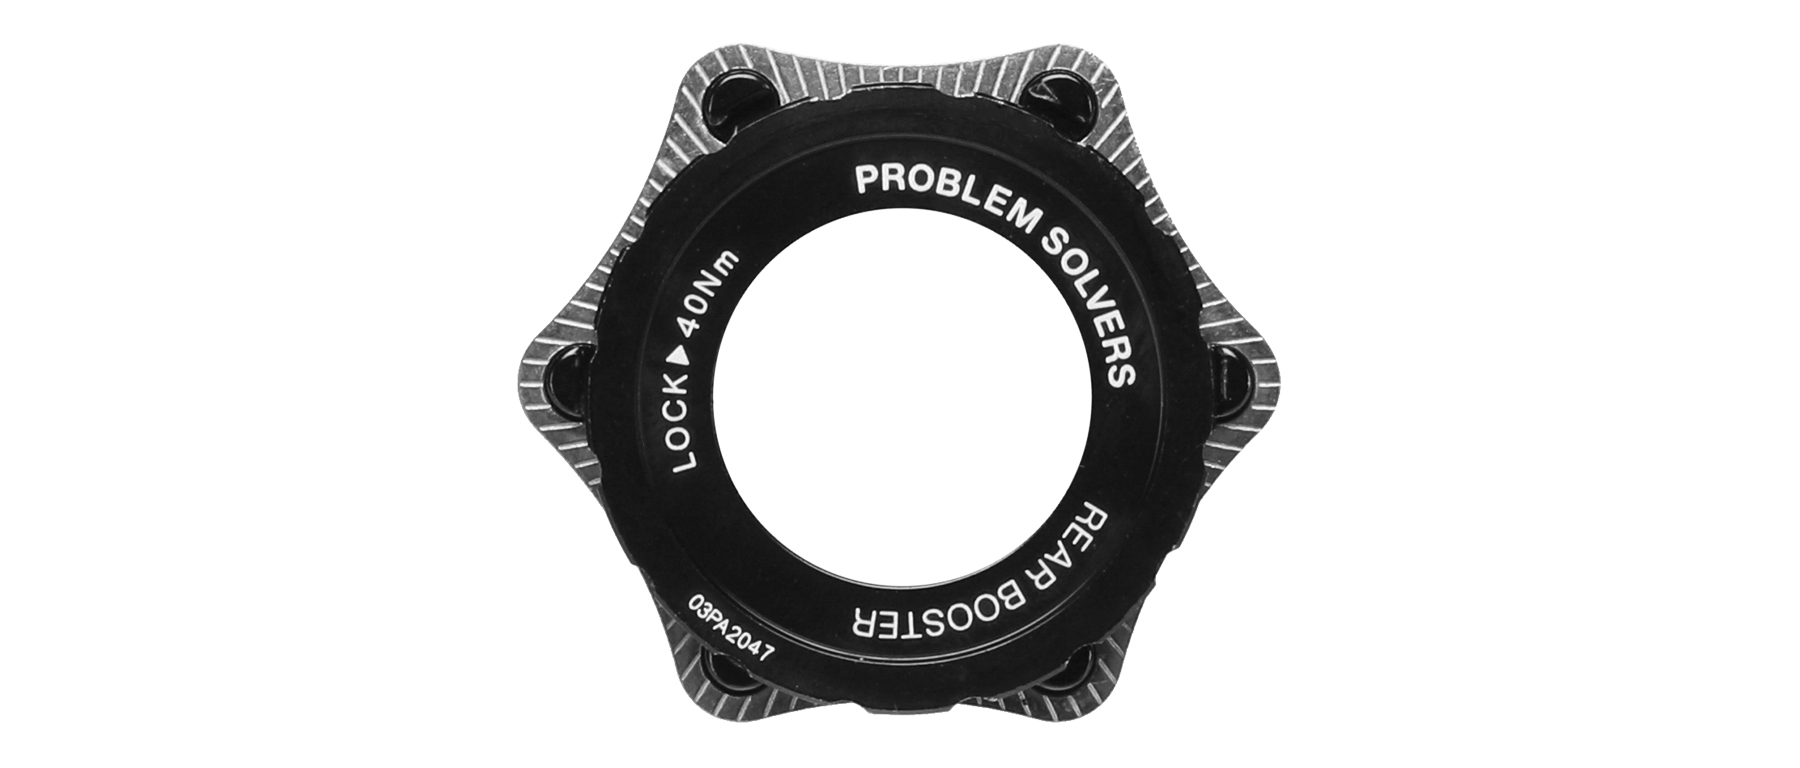 Problem Solvers Rear 6mm Booster Kit - Center Lock Hub